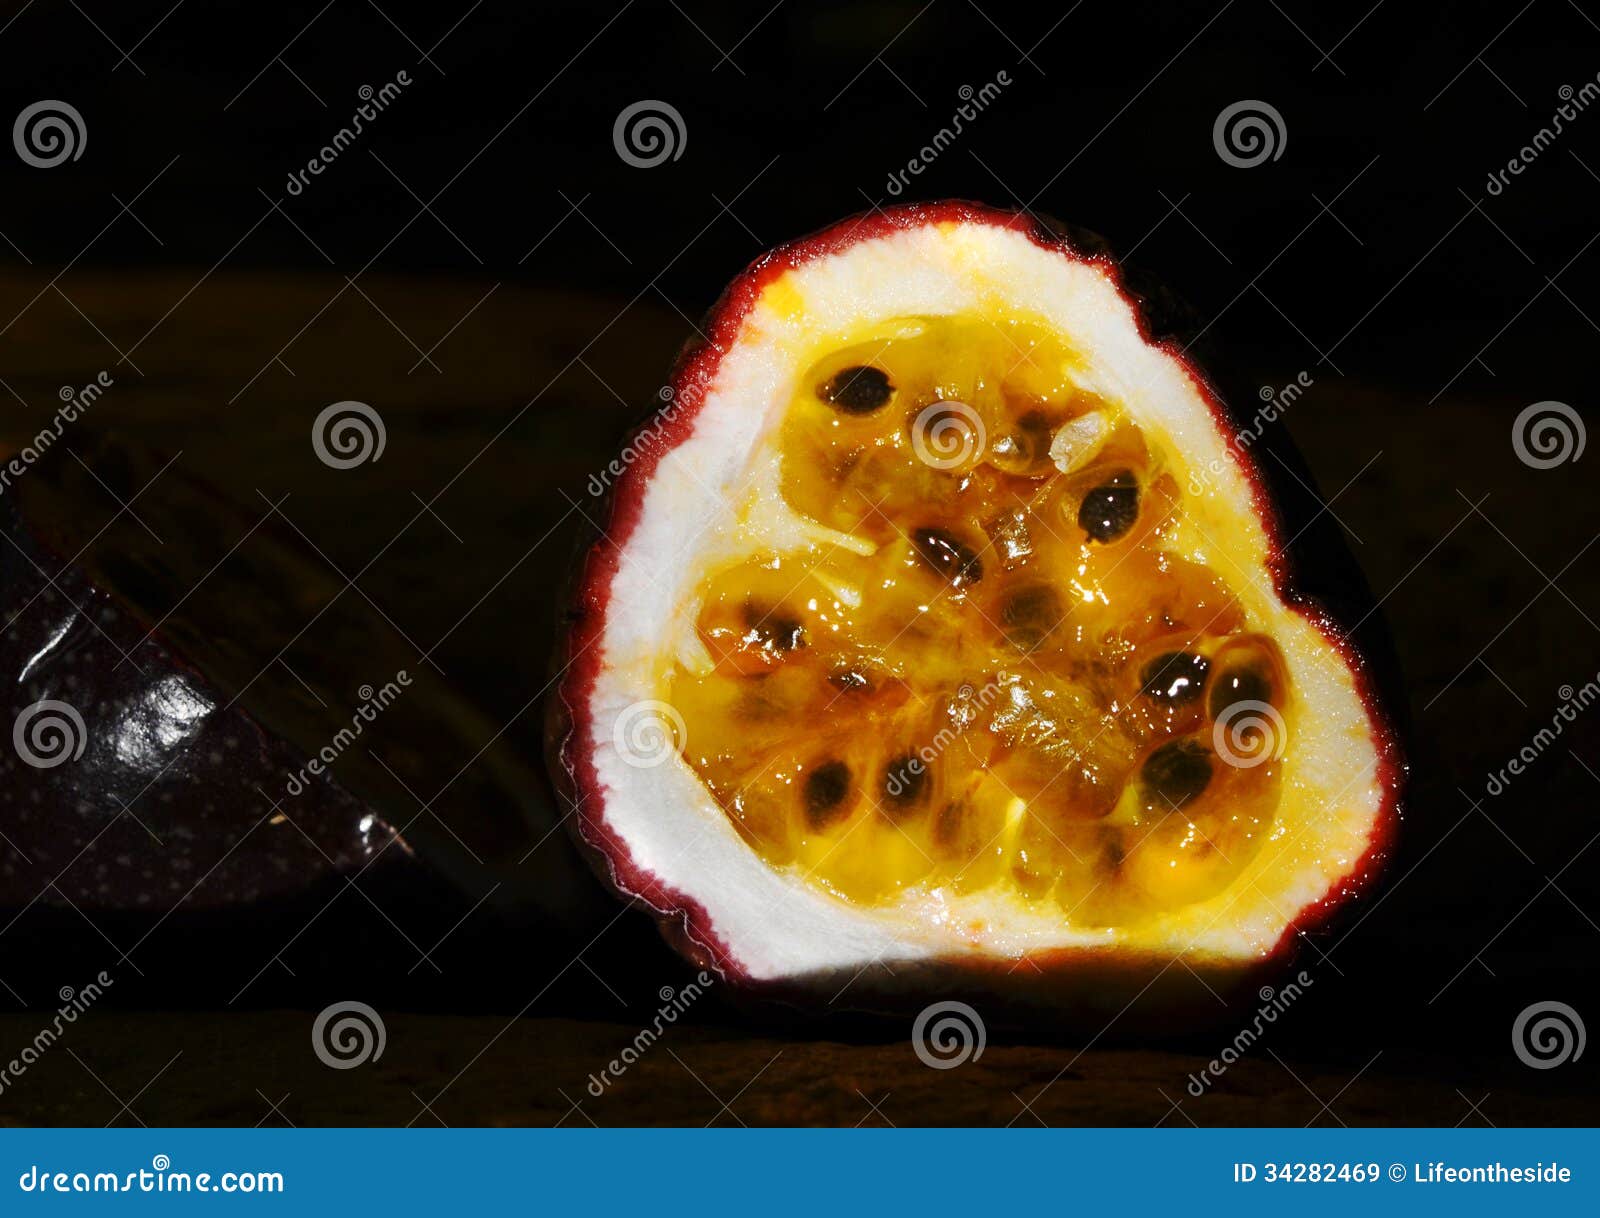 Isolated Inside Cut Open Passion Fruit Flesh Stock Image